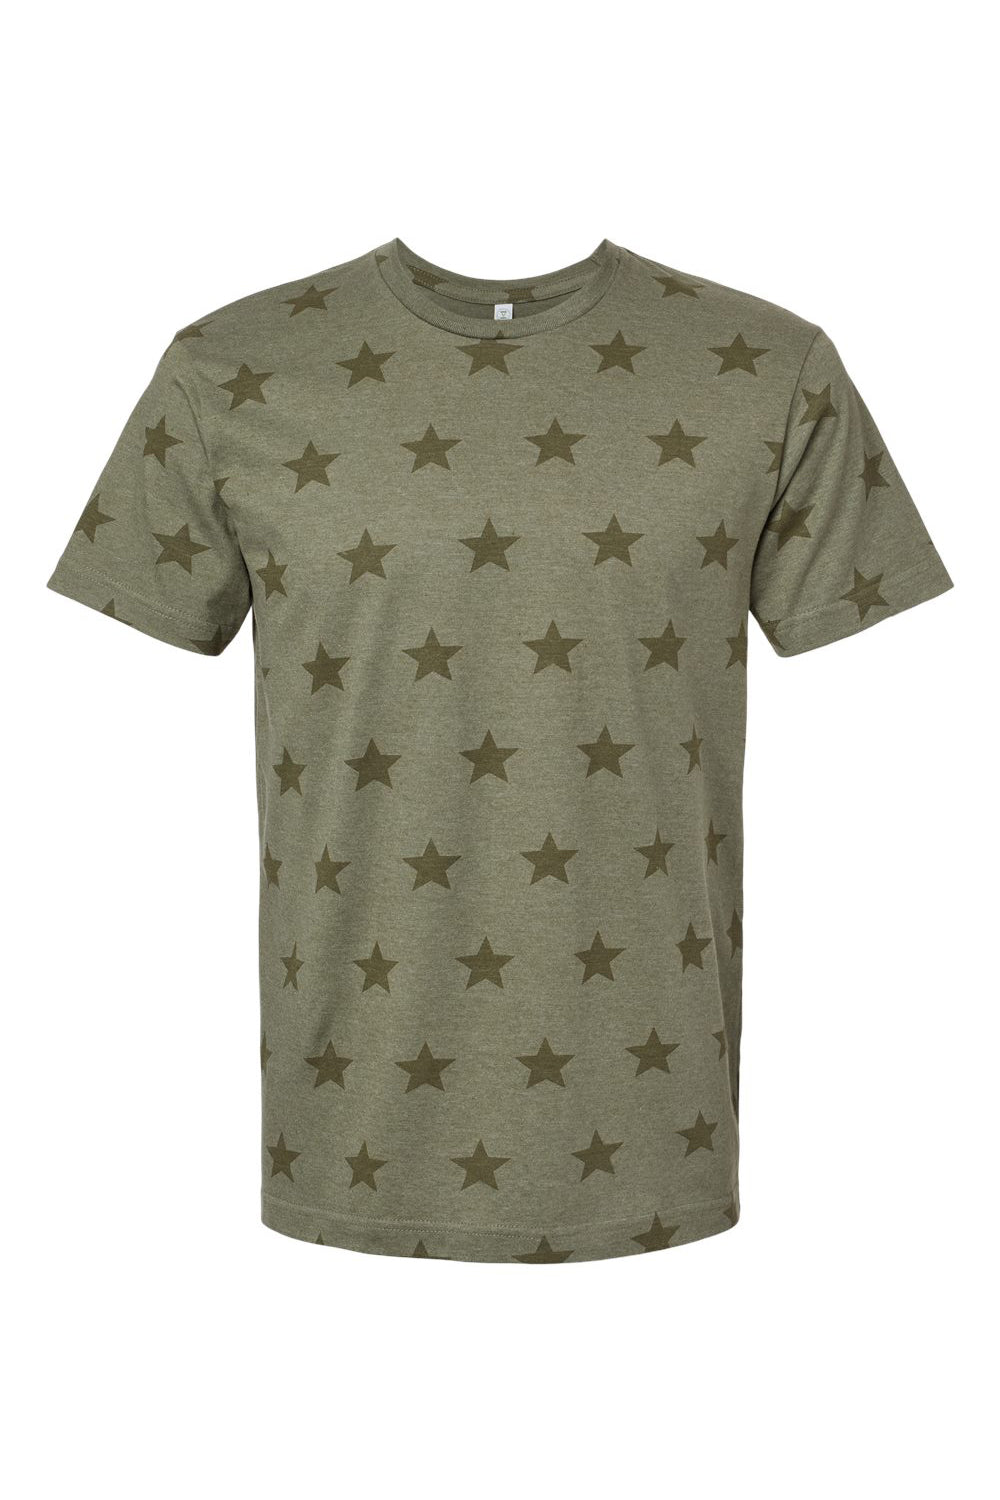 Code Five 3929 Mens Star Print Short Sleeve Crewneck T-Shirt Military Green Flat Front